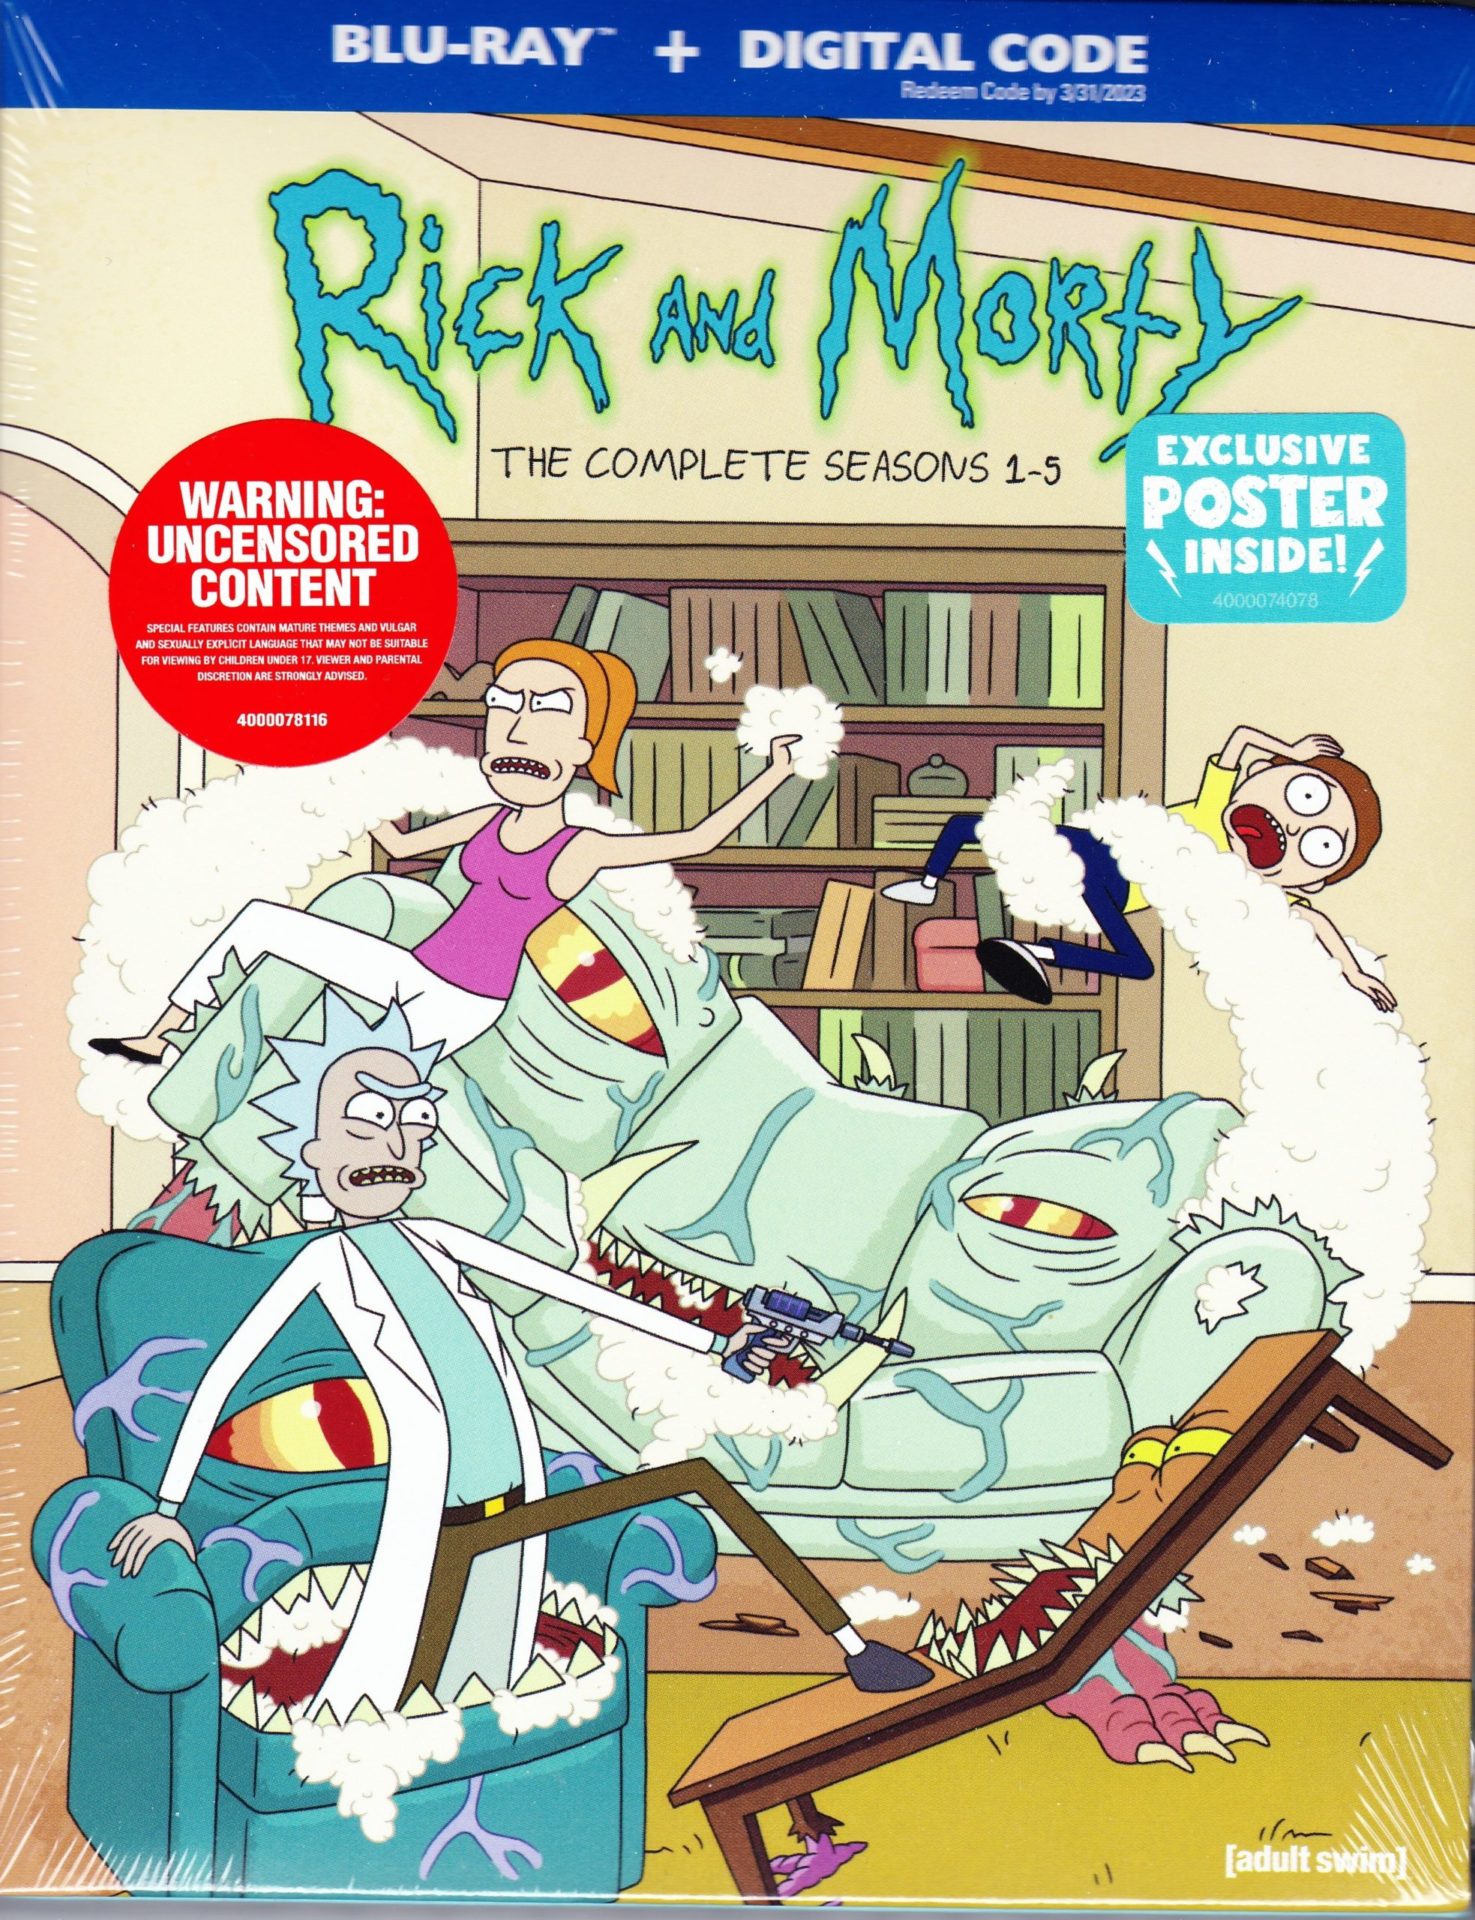 Rick and Morty Seasons 1 to 5 Blu-ray collection